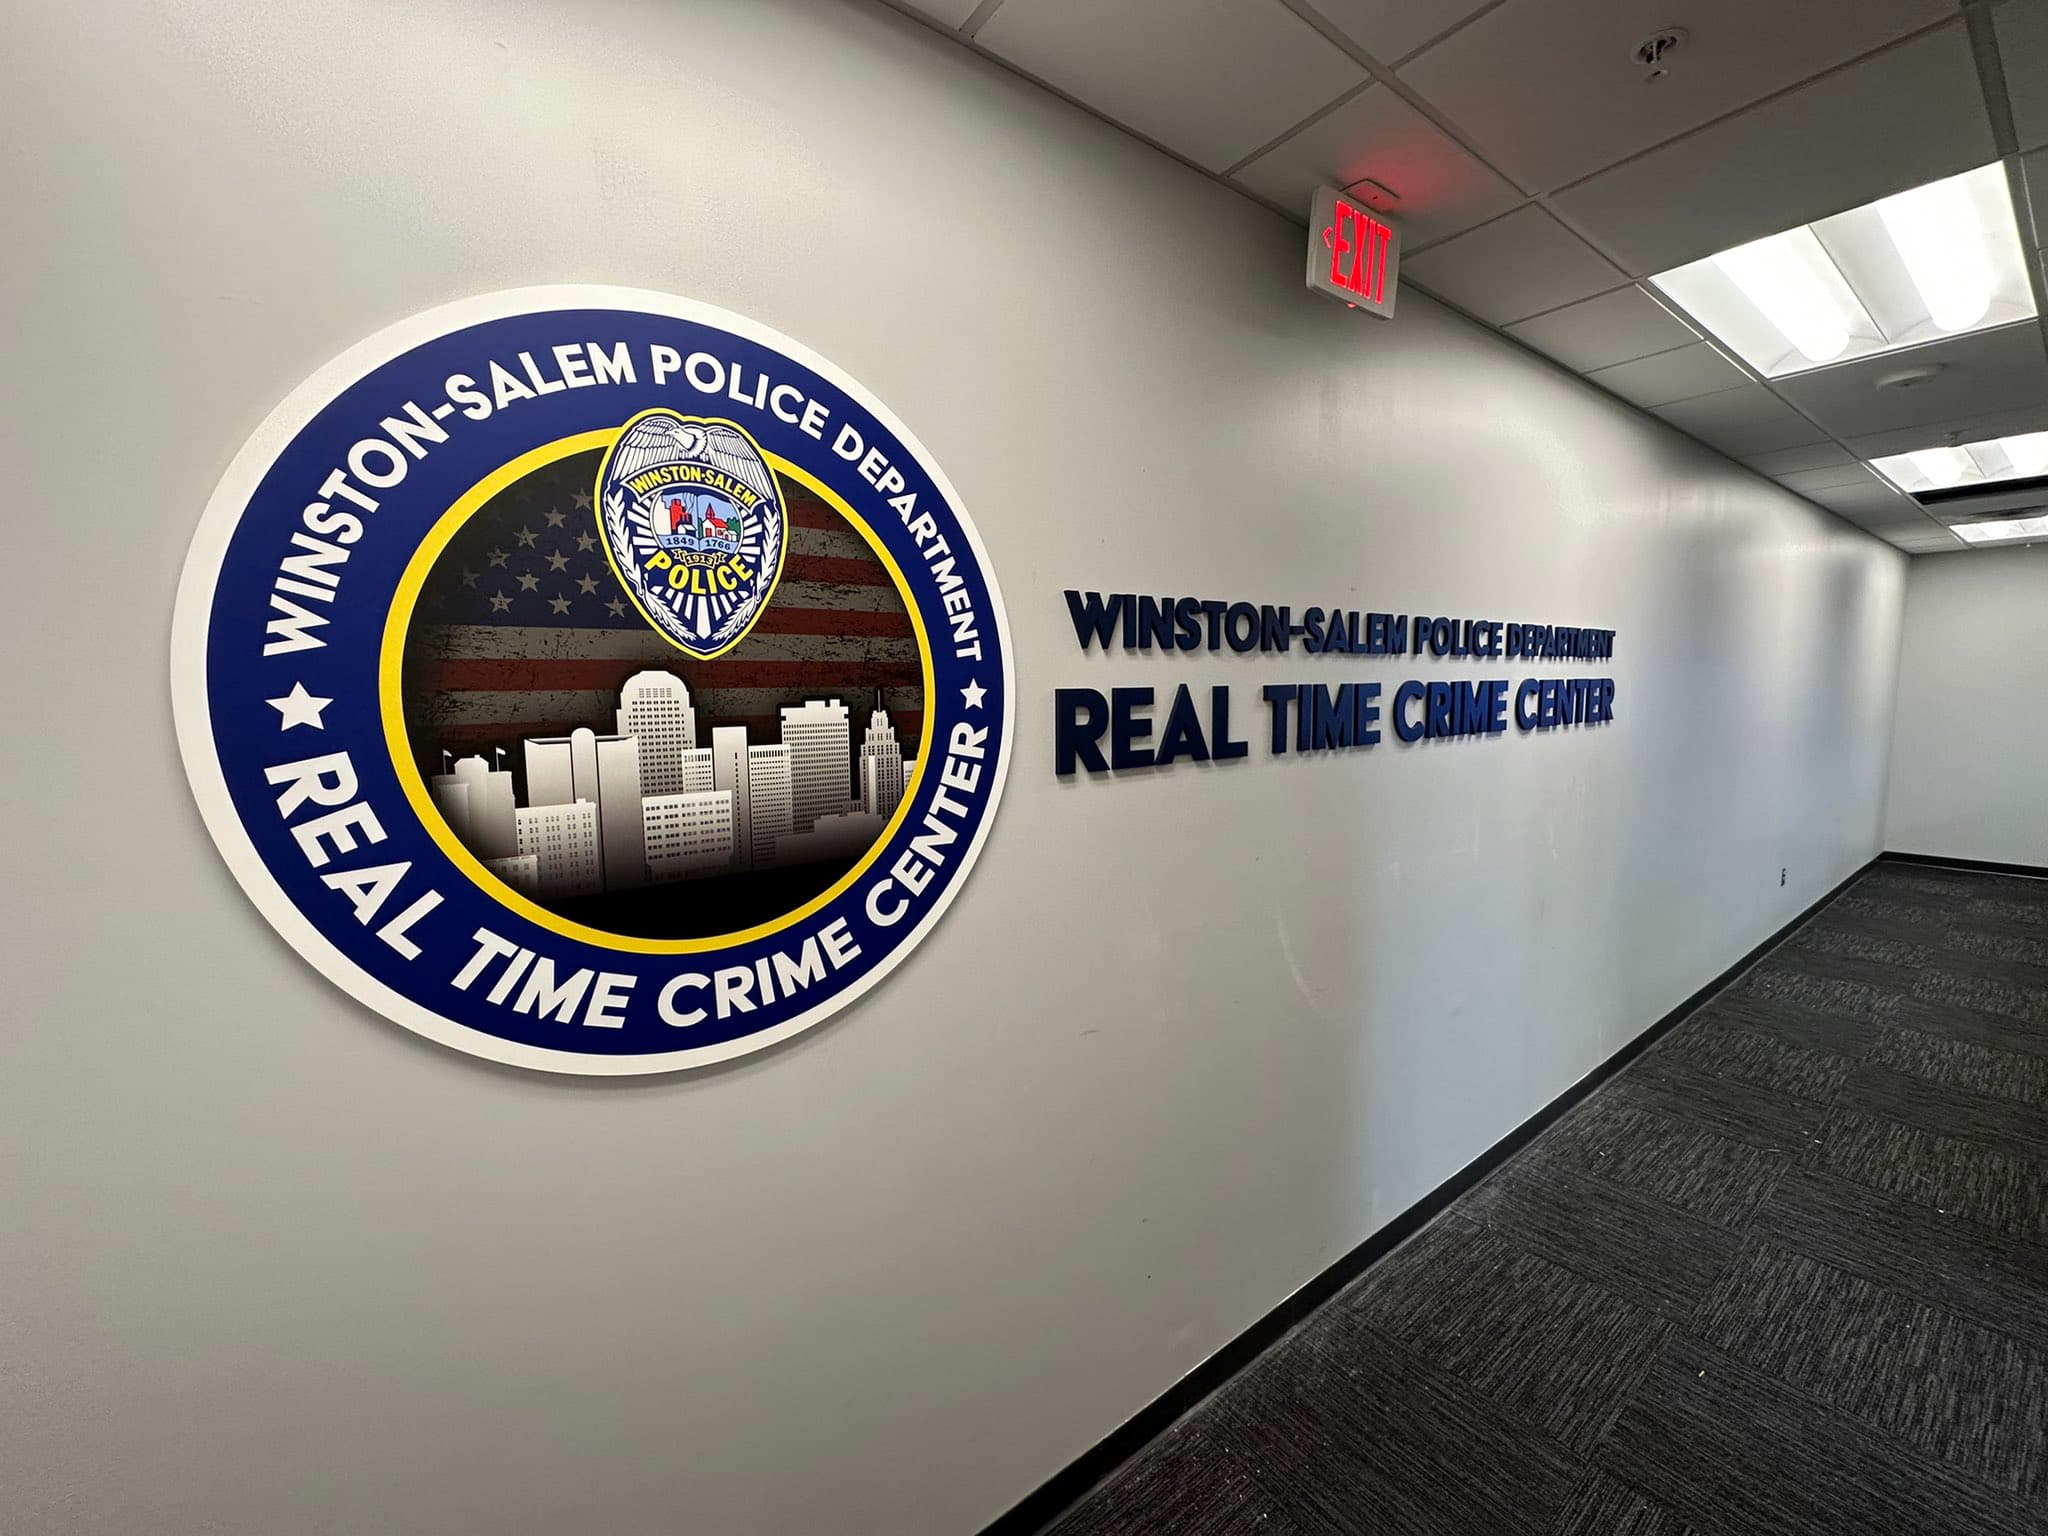 Winston-Salem Police Department